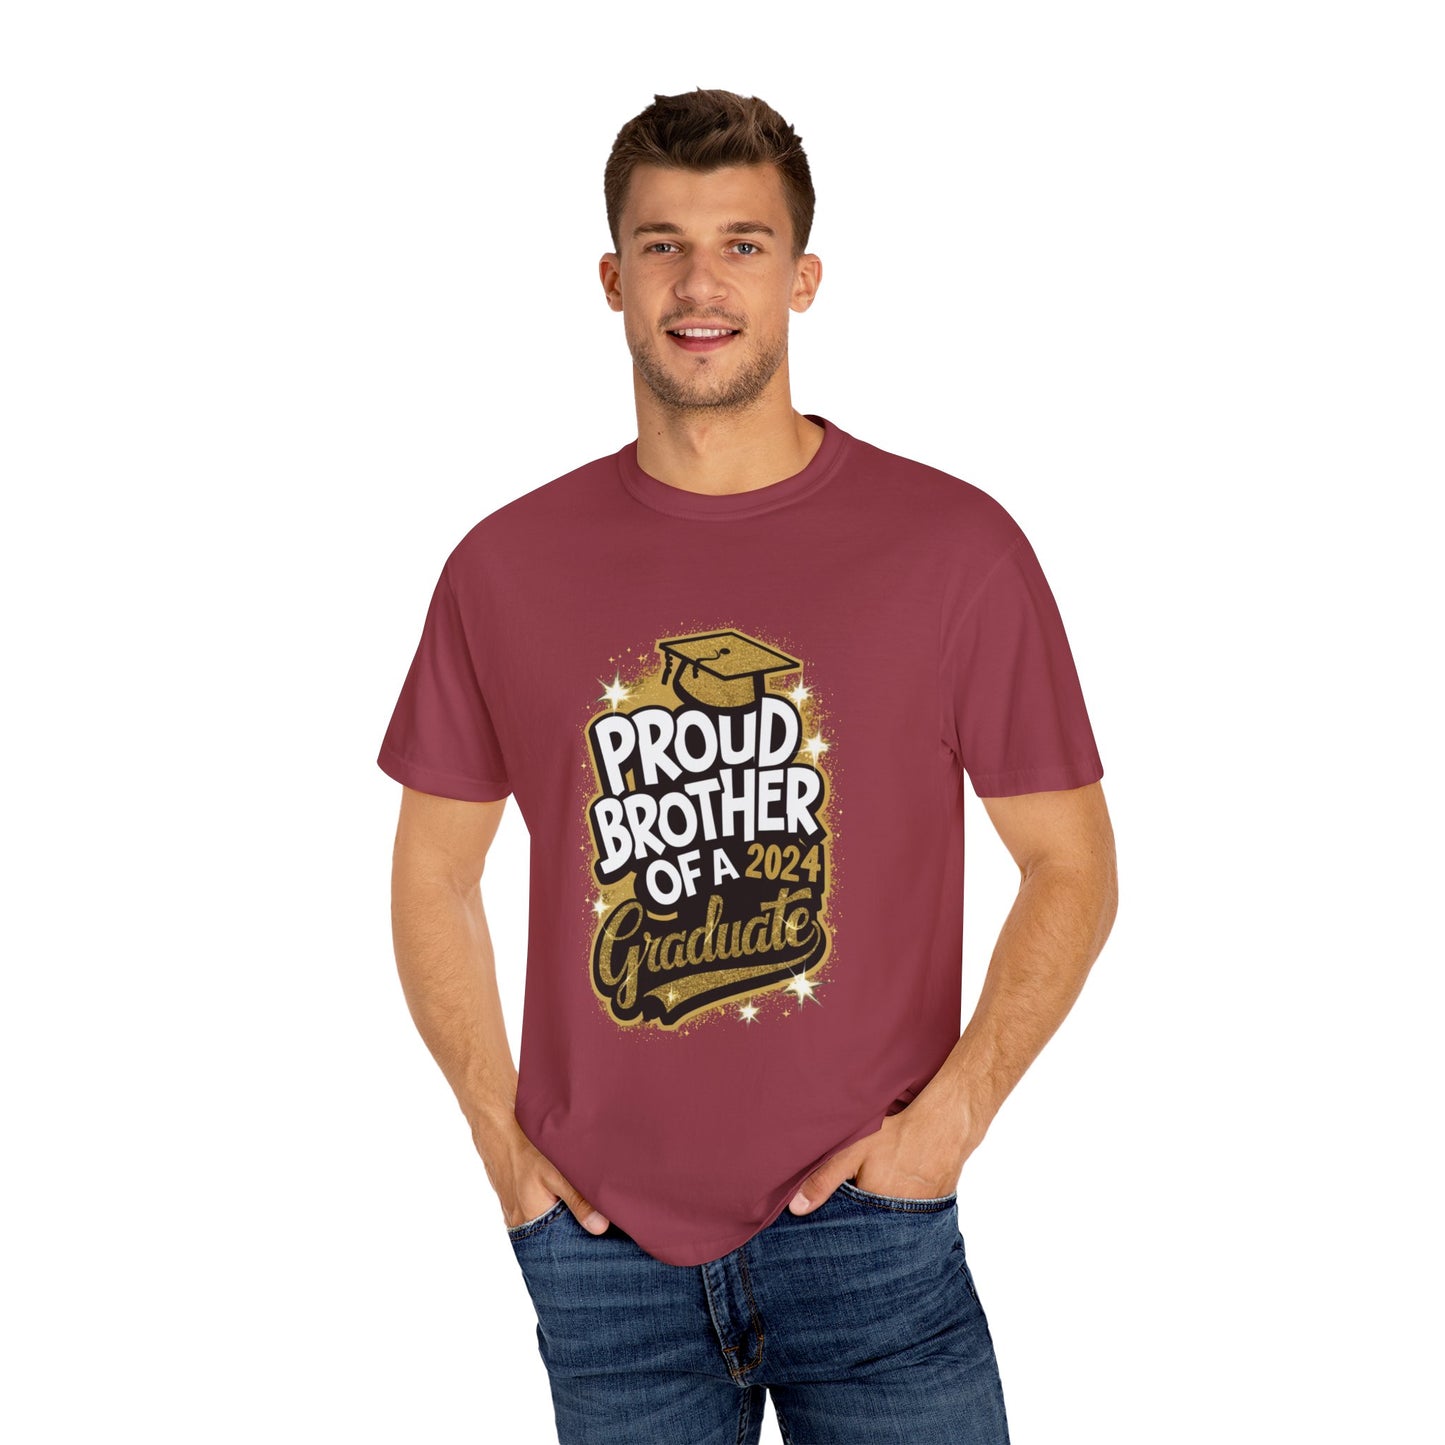 Proud Brother of a 2024 Graduate Unisex Garment-dyed T-shirt Cotton Funny Humorous Graphic Soft Premium Unisex Men Women Chili T-shirt Birthday Gift-36